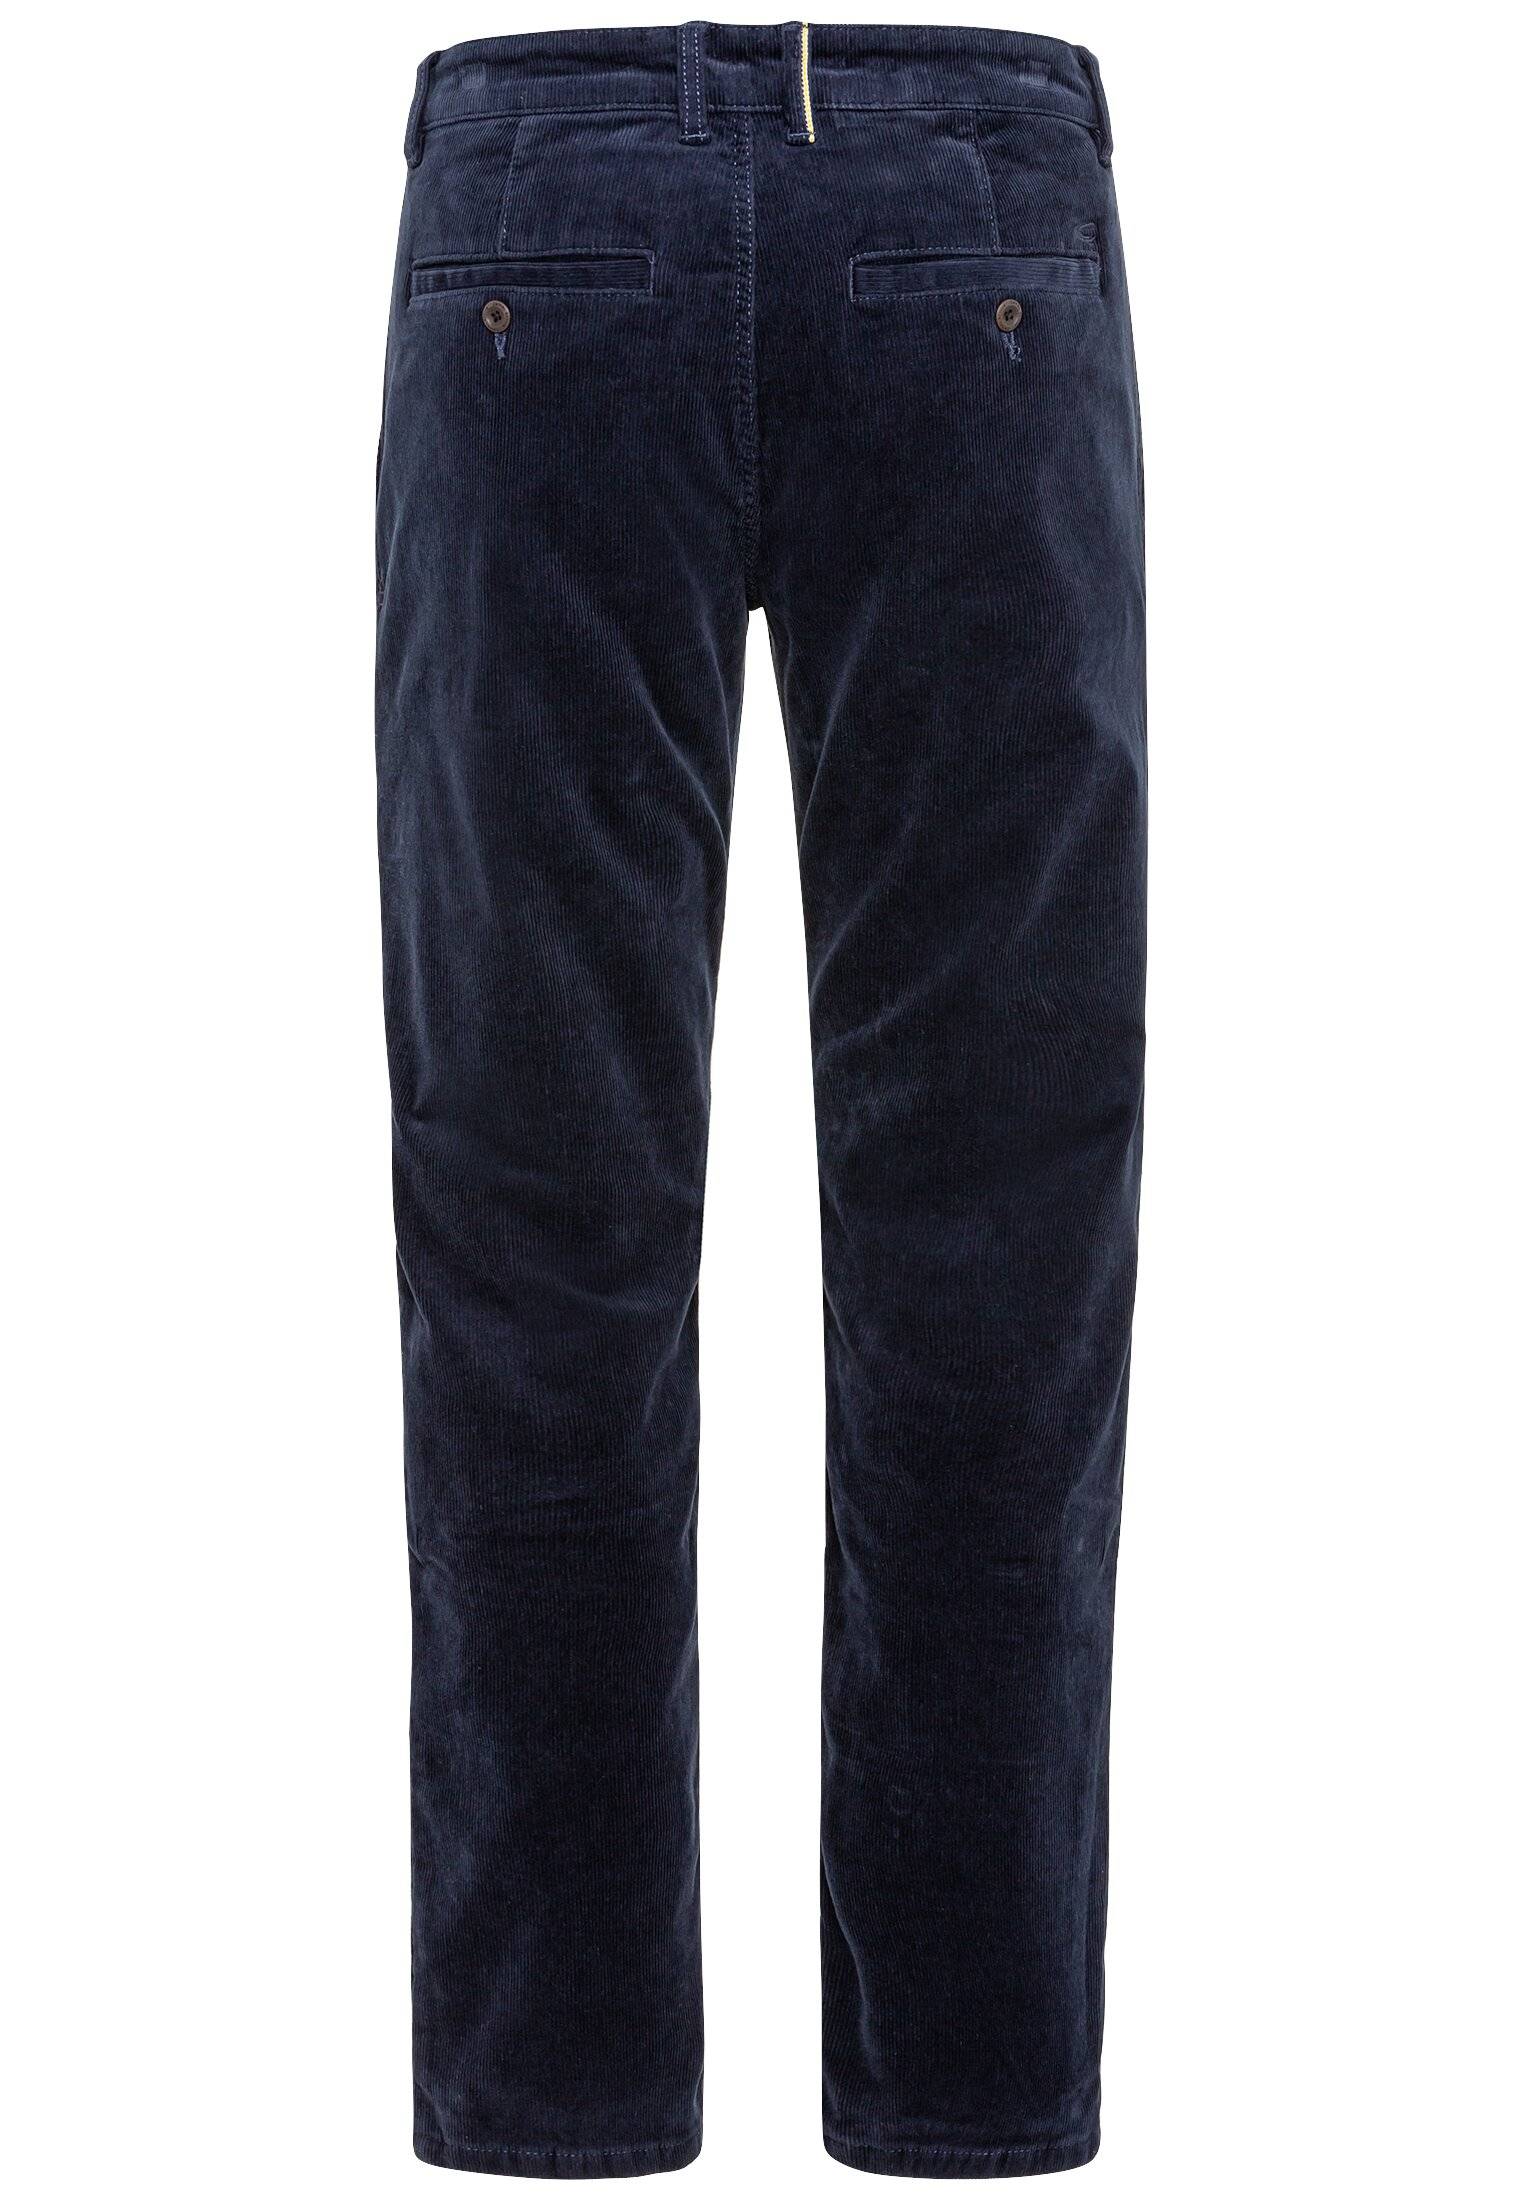 Мужские брюки Camel Active, синие, цвет синий, размер 32 - фото 2